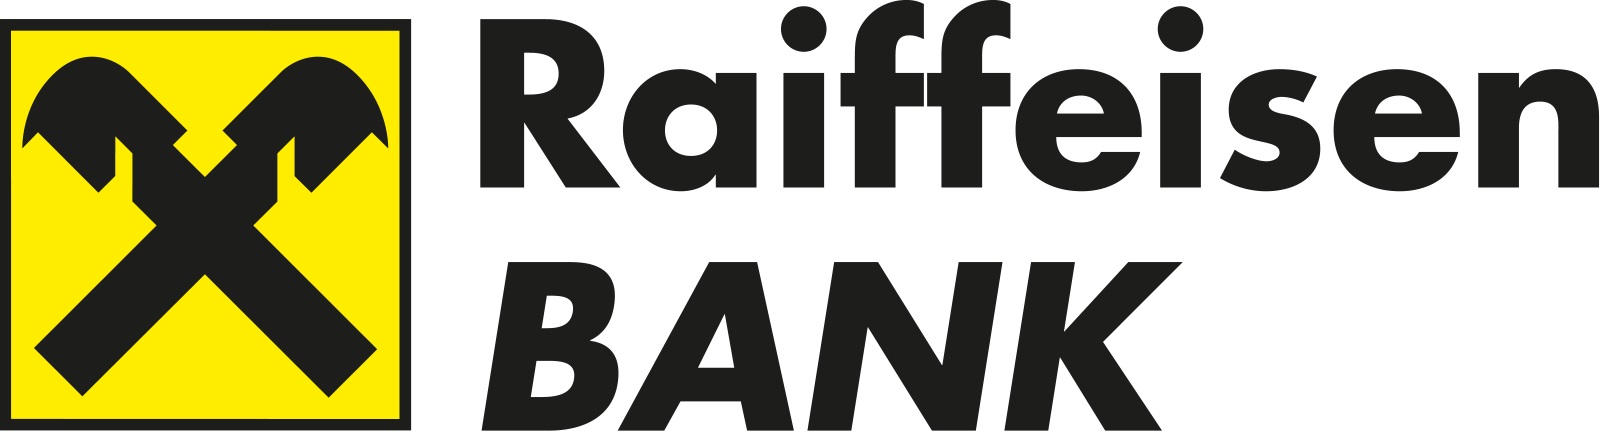  Platba vopred na účet Raiffeisen BANK: 563476002/5500 (IBA ČESKÁ REPUBLIKA)